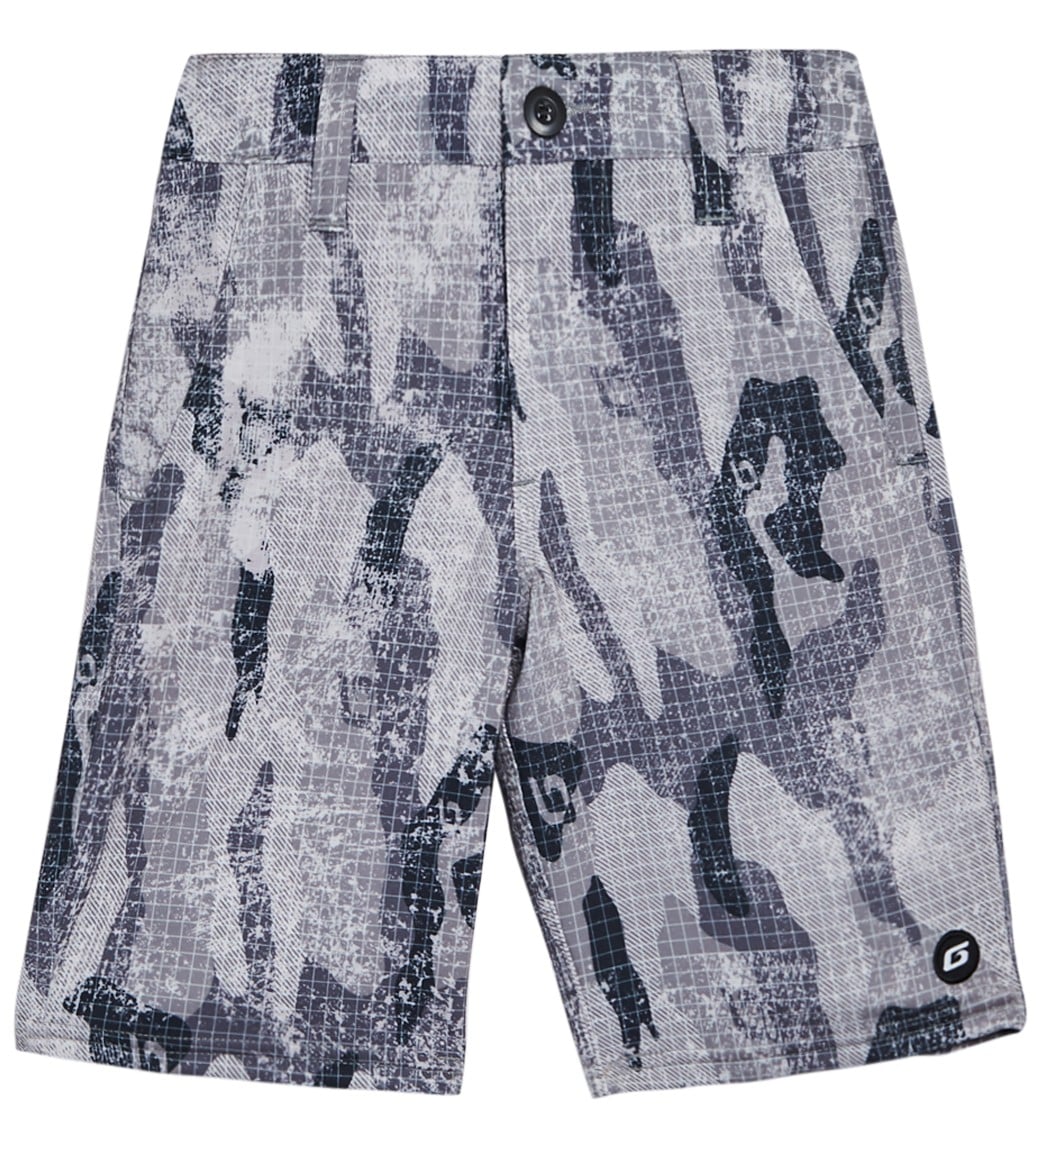 Grom Boys' Off Road Wet/Dry Short - Gray Camo Medium 8 Polyester/Cotton - Swimoutlet.com